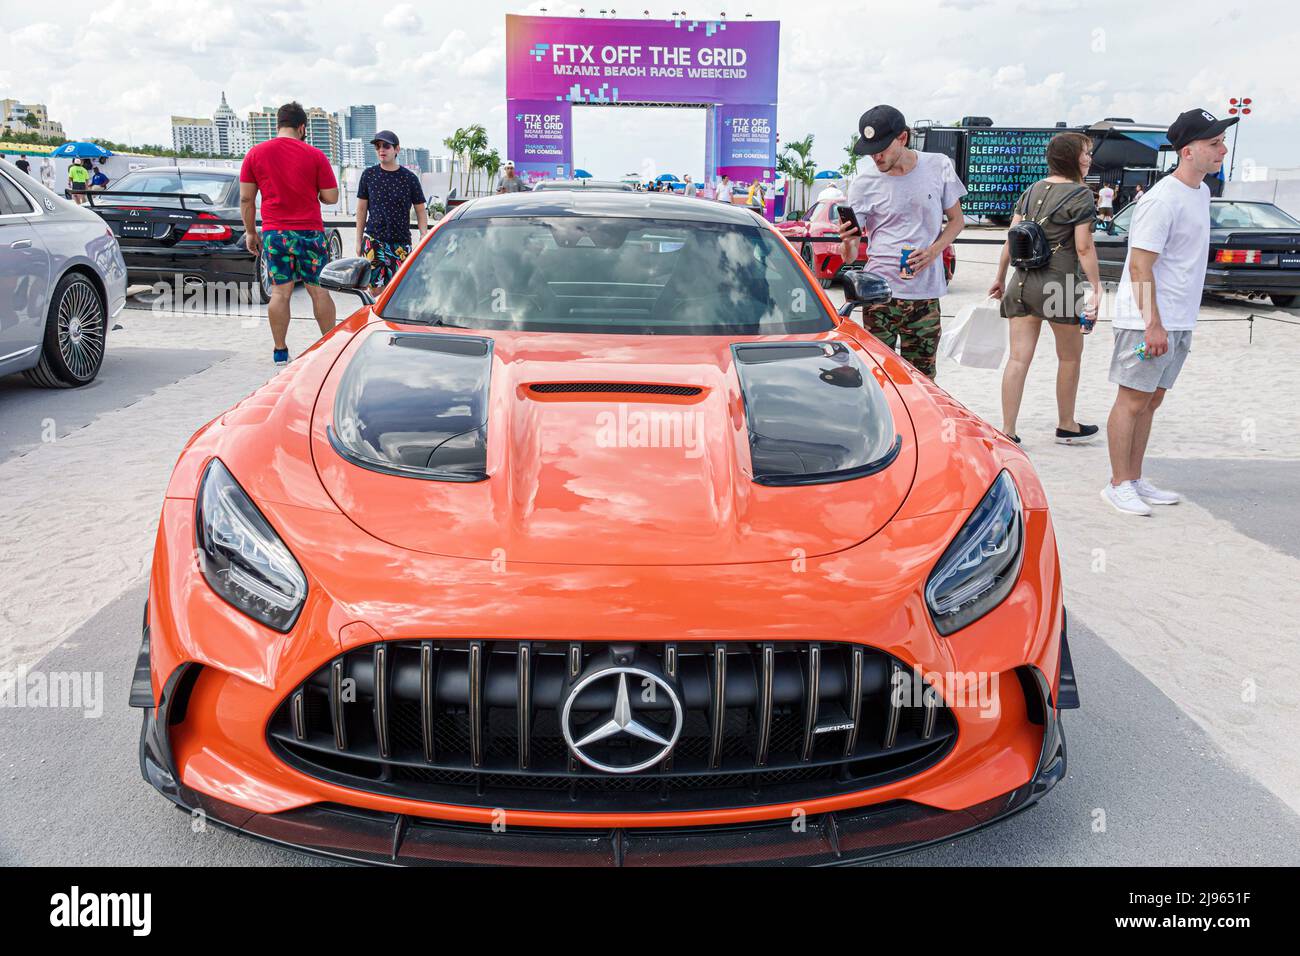 Miami Beach Florida,FTX Off the Grid event,Race Weekend Grand Prix Formula One 1 F1 racing event,orange Mercedes Benz sports car Stock Photo